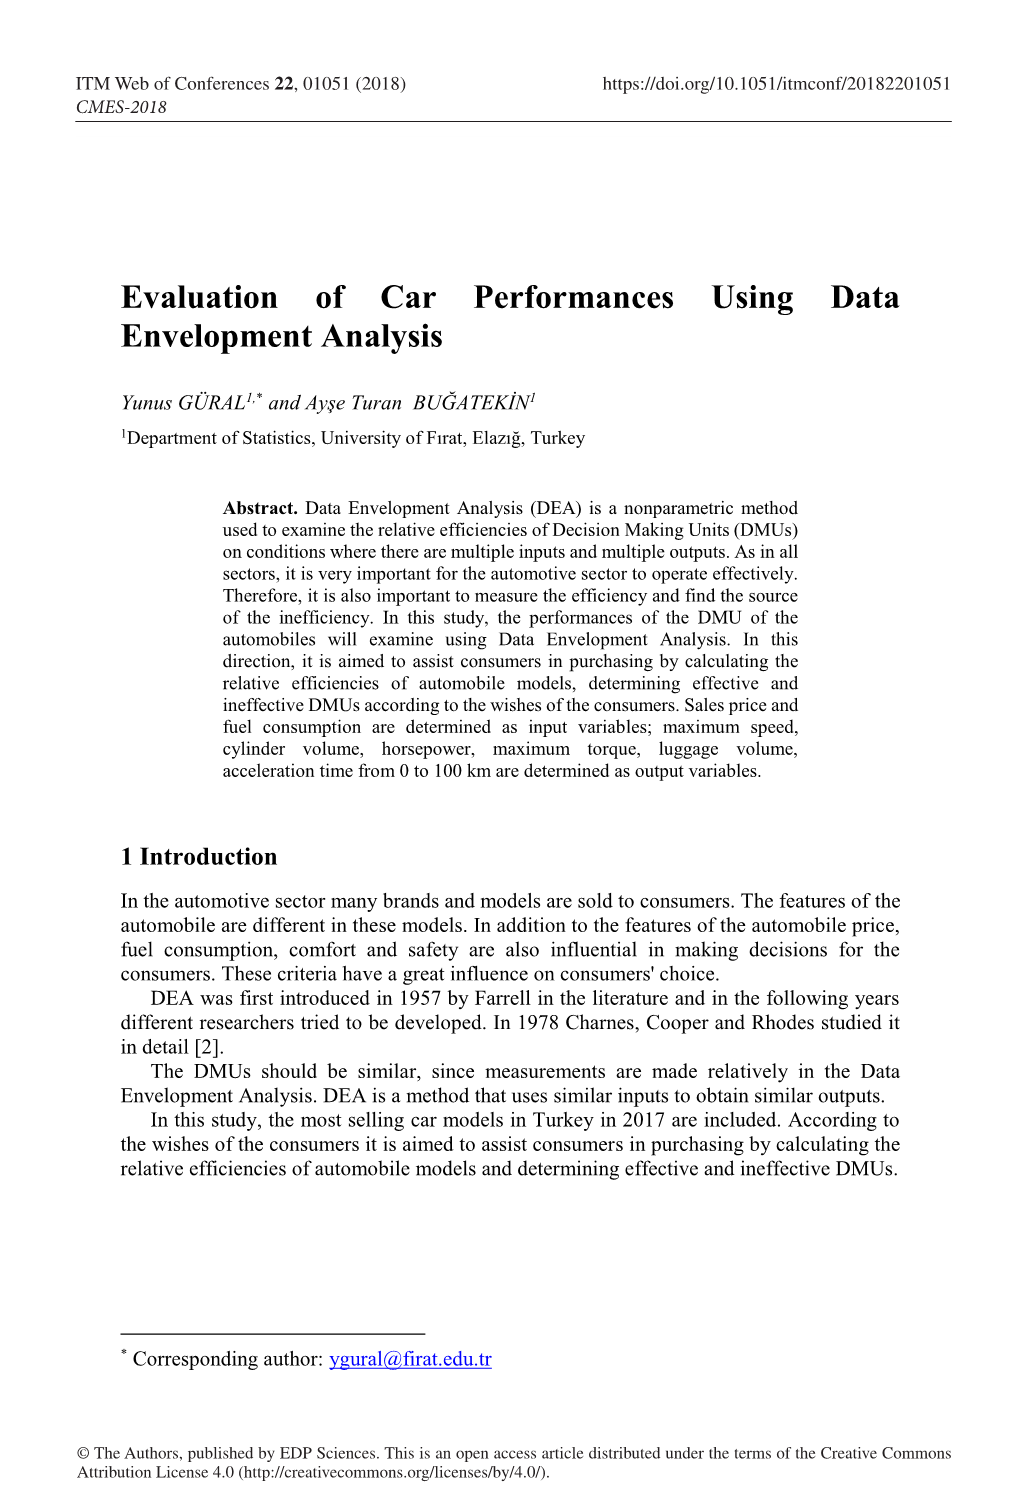 Evaluation of Car Performances Using Data Envelopment Analysis